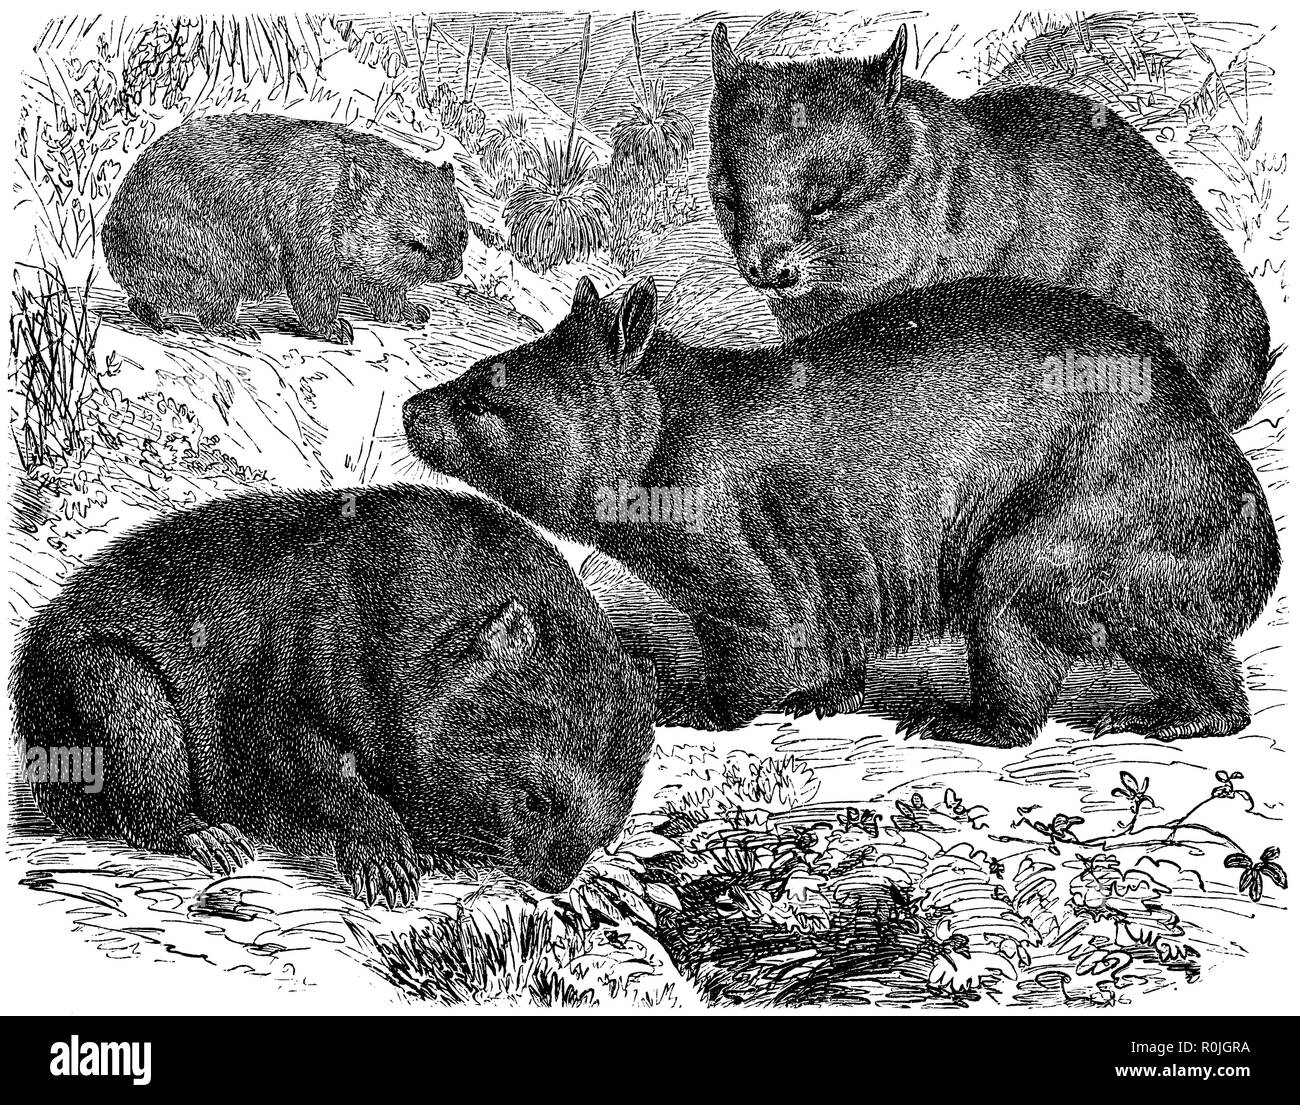 Tasmanian Wombat u. Phascolomys latifrons - Breitstirnwombat, anonym 1908 Foto Stock